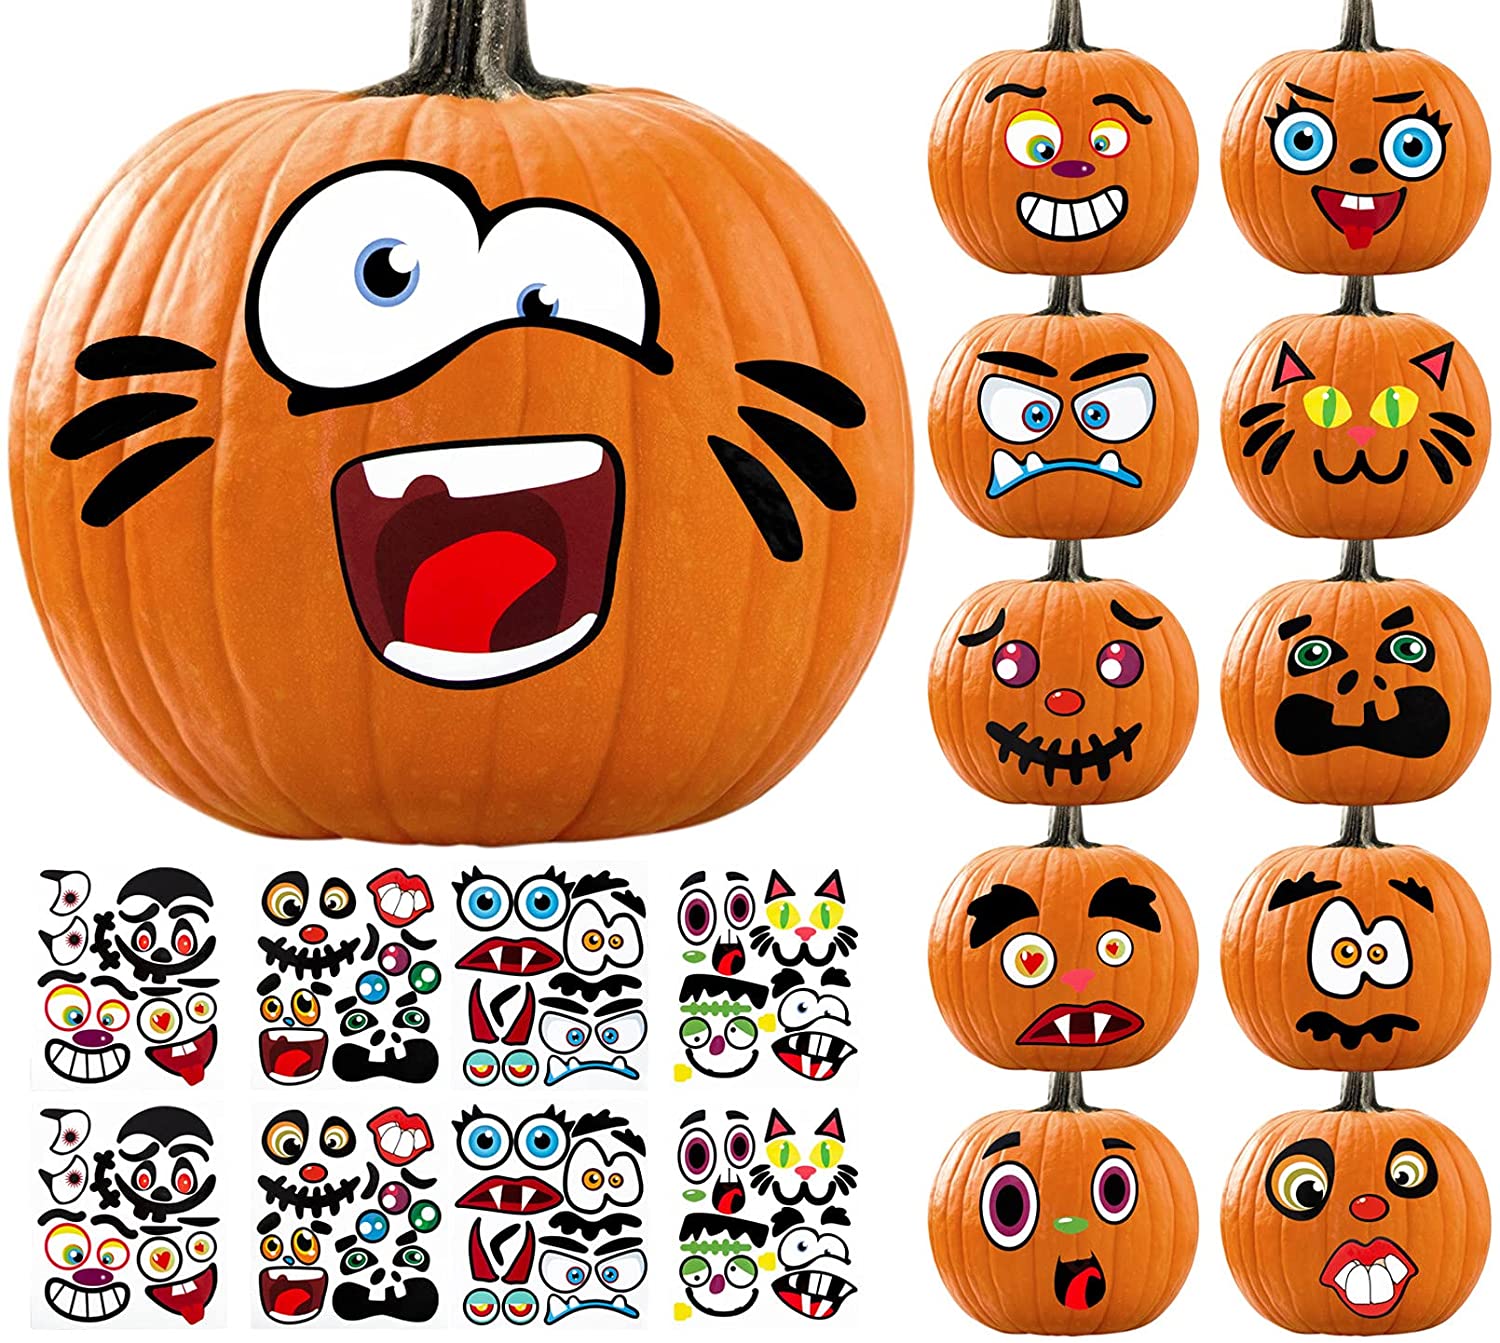 Qpout 12 Sheets Fun Halloween Pumpkin Sticker for Children Halloween Party Holiday Party Gift Bag Filler Supplies Decoration Rewards 